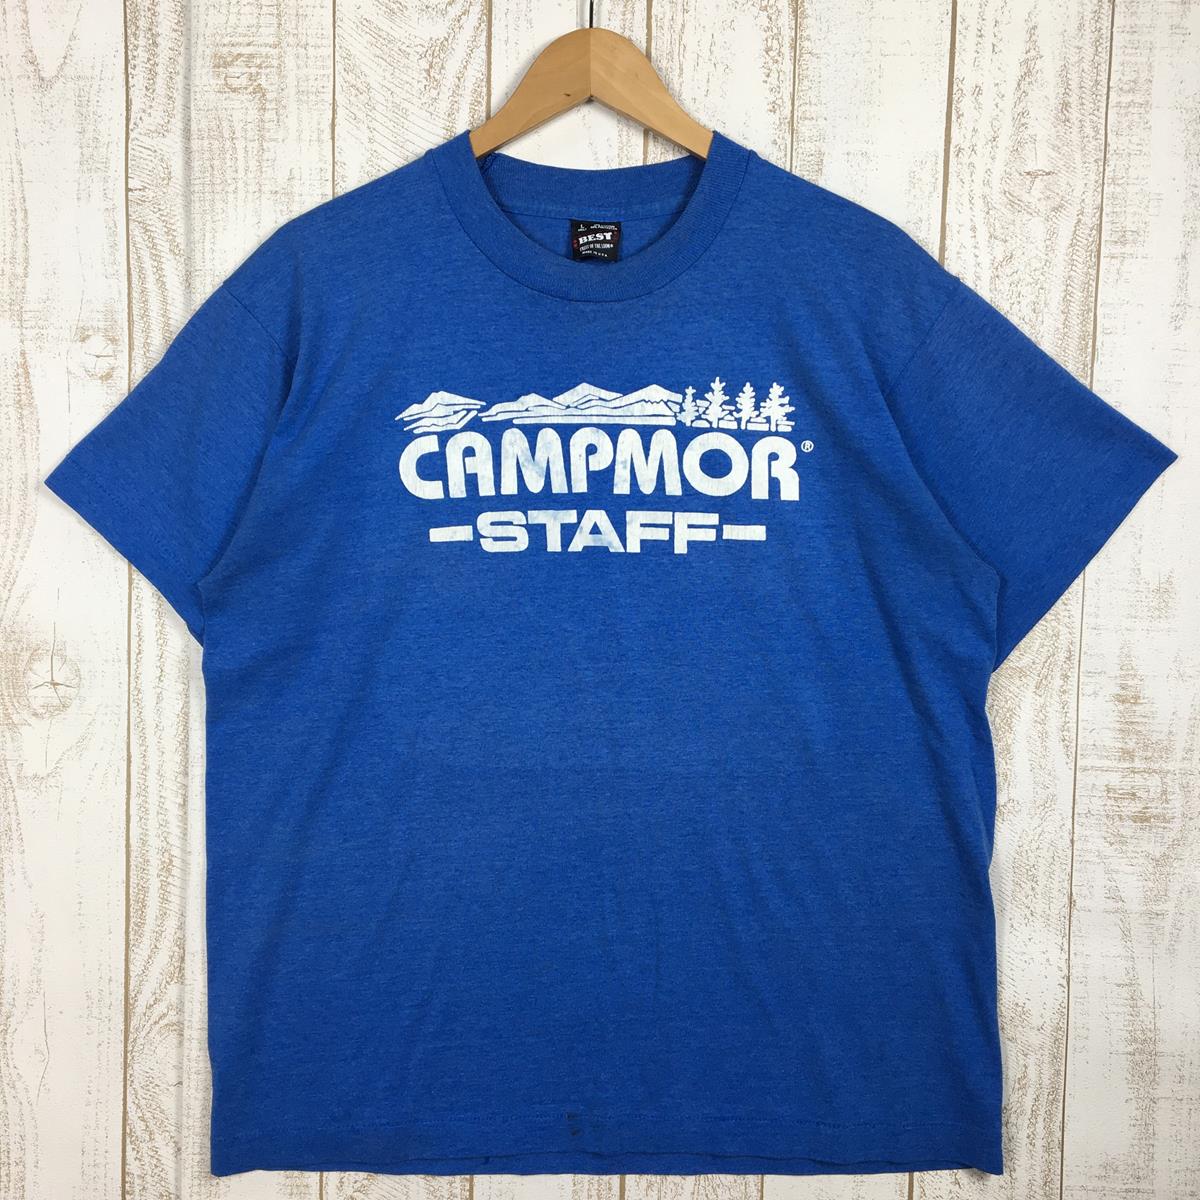 【MEN's L】 1990s キャンプモア スタッフ Tシャツ Campmor Staff T-Shirts アメリカ製 米国ニュージャージー州のアウトドアショップ 希少なアウトドアTシャツ フルーツオブザルームボディ 非売品 ビンテージ 入手困難 ブルー系